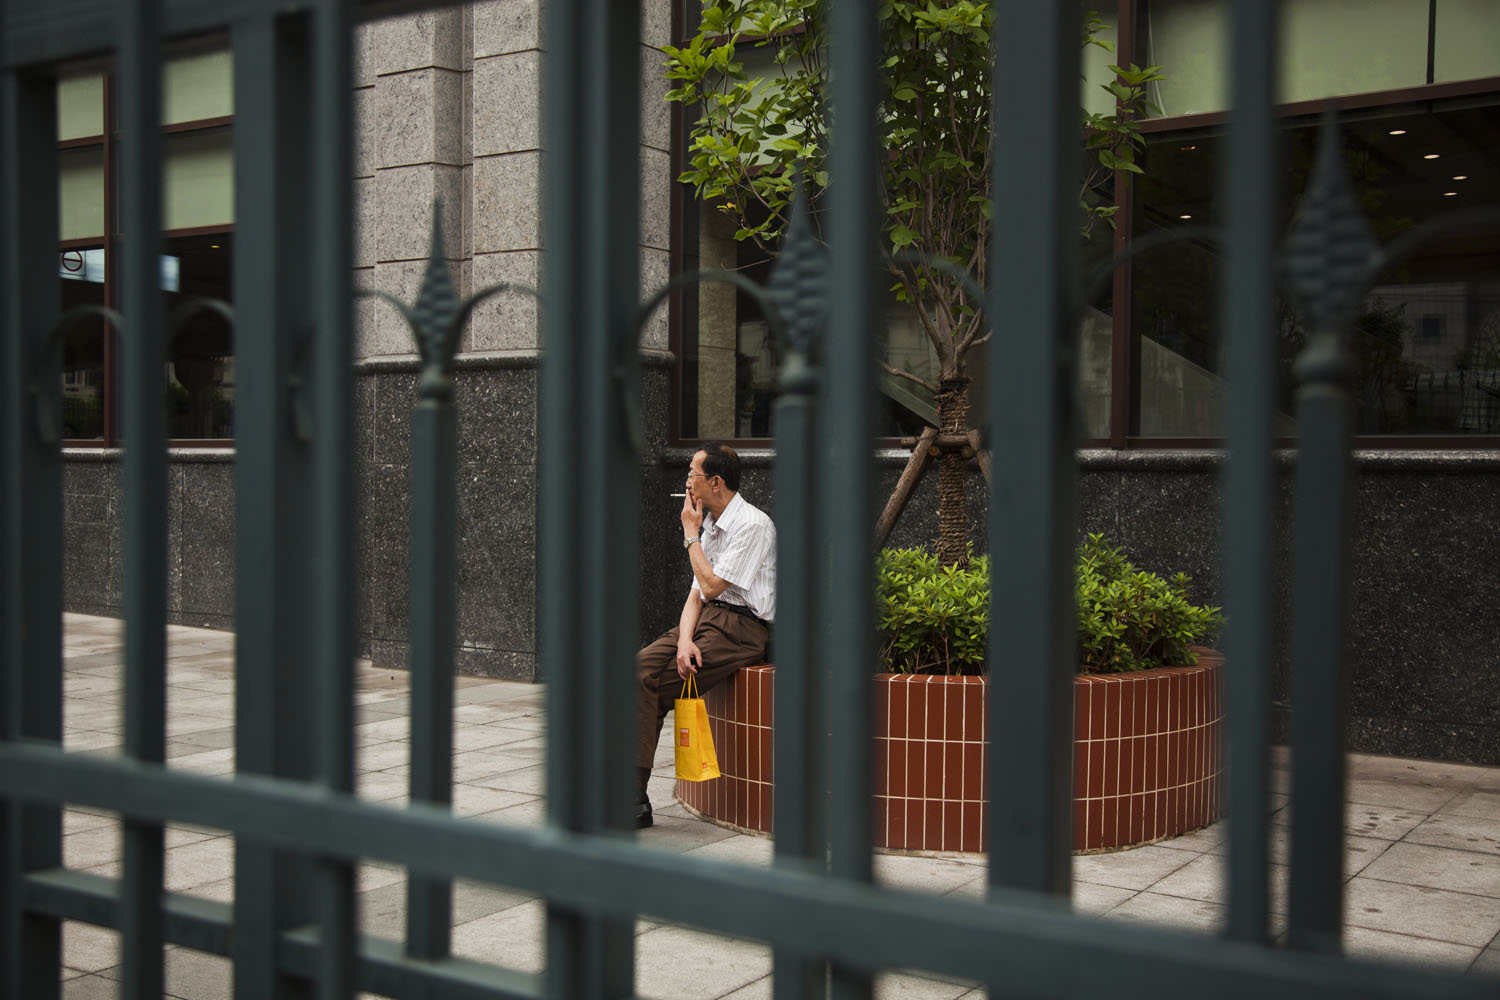 Man smoking a cigarette. Shanghai, China. 2012.